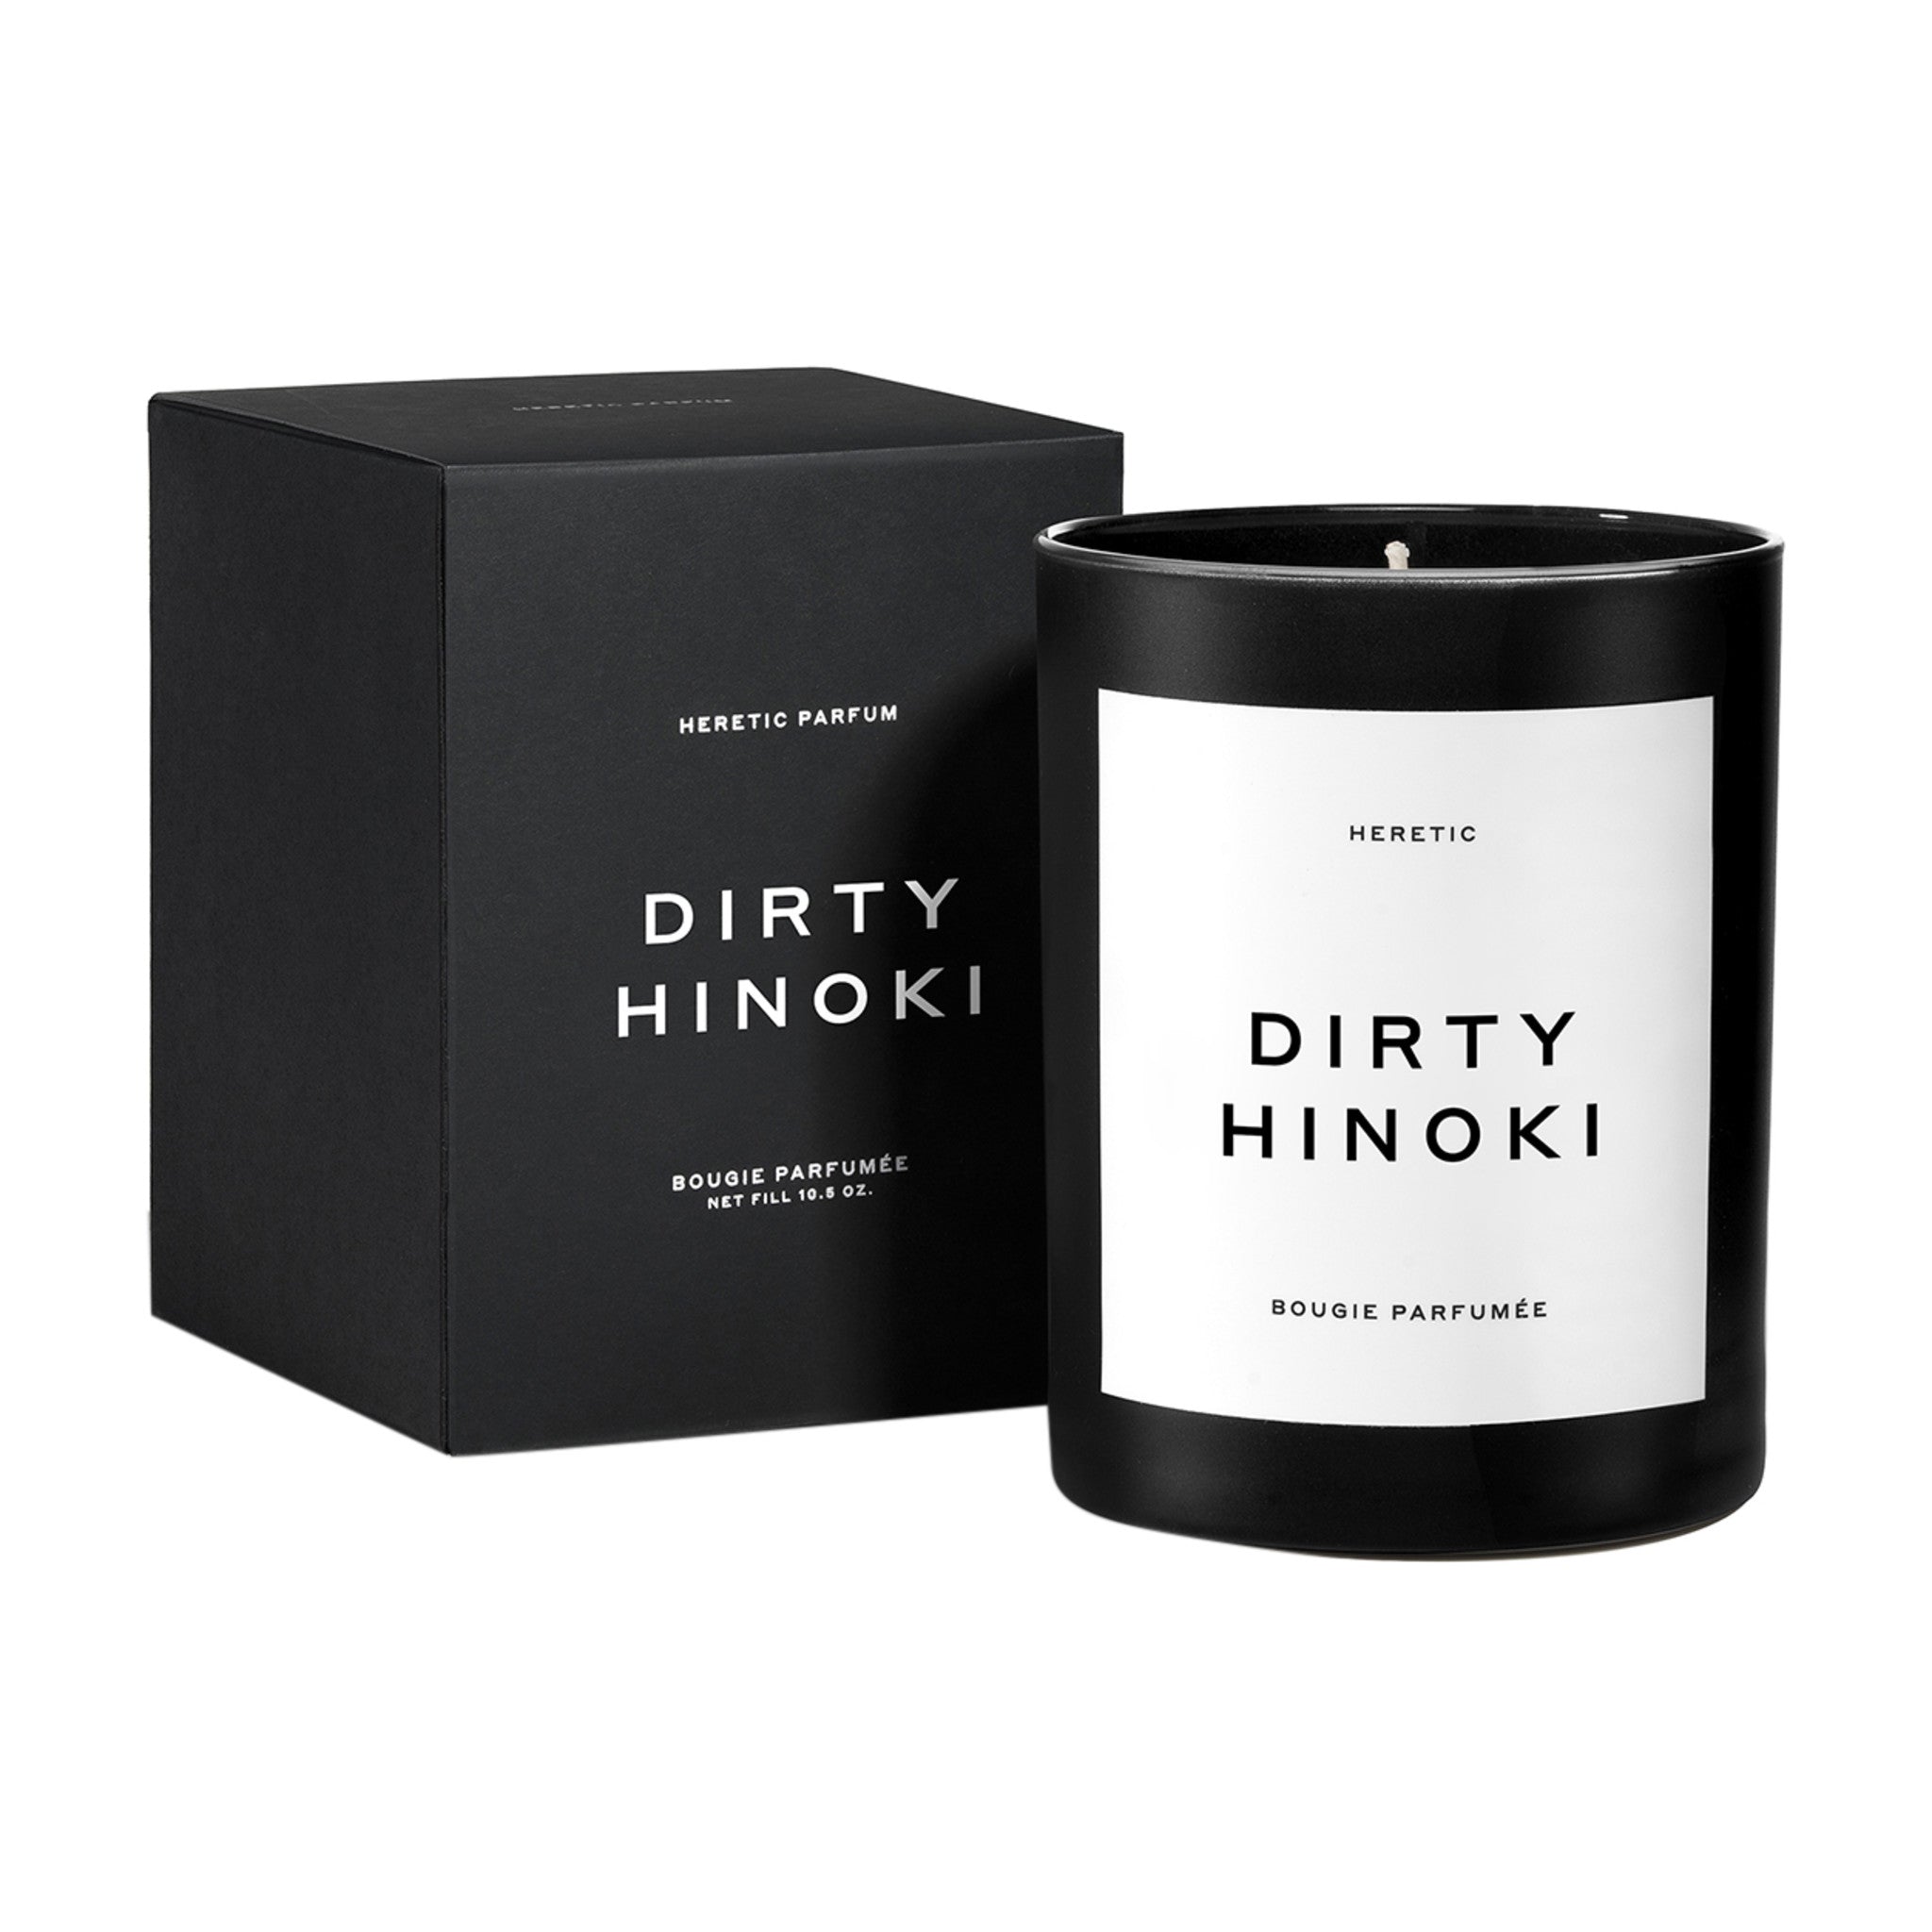 Heretic Dirty Hinoki Candle main image.